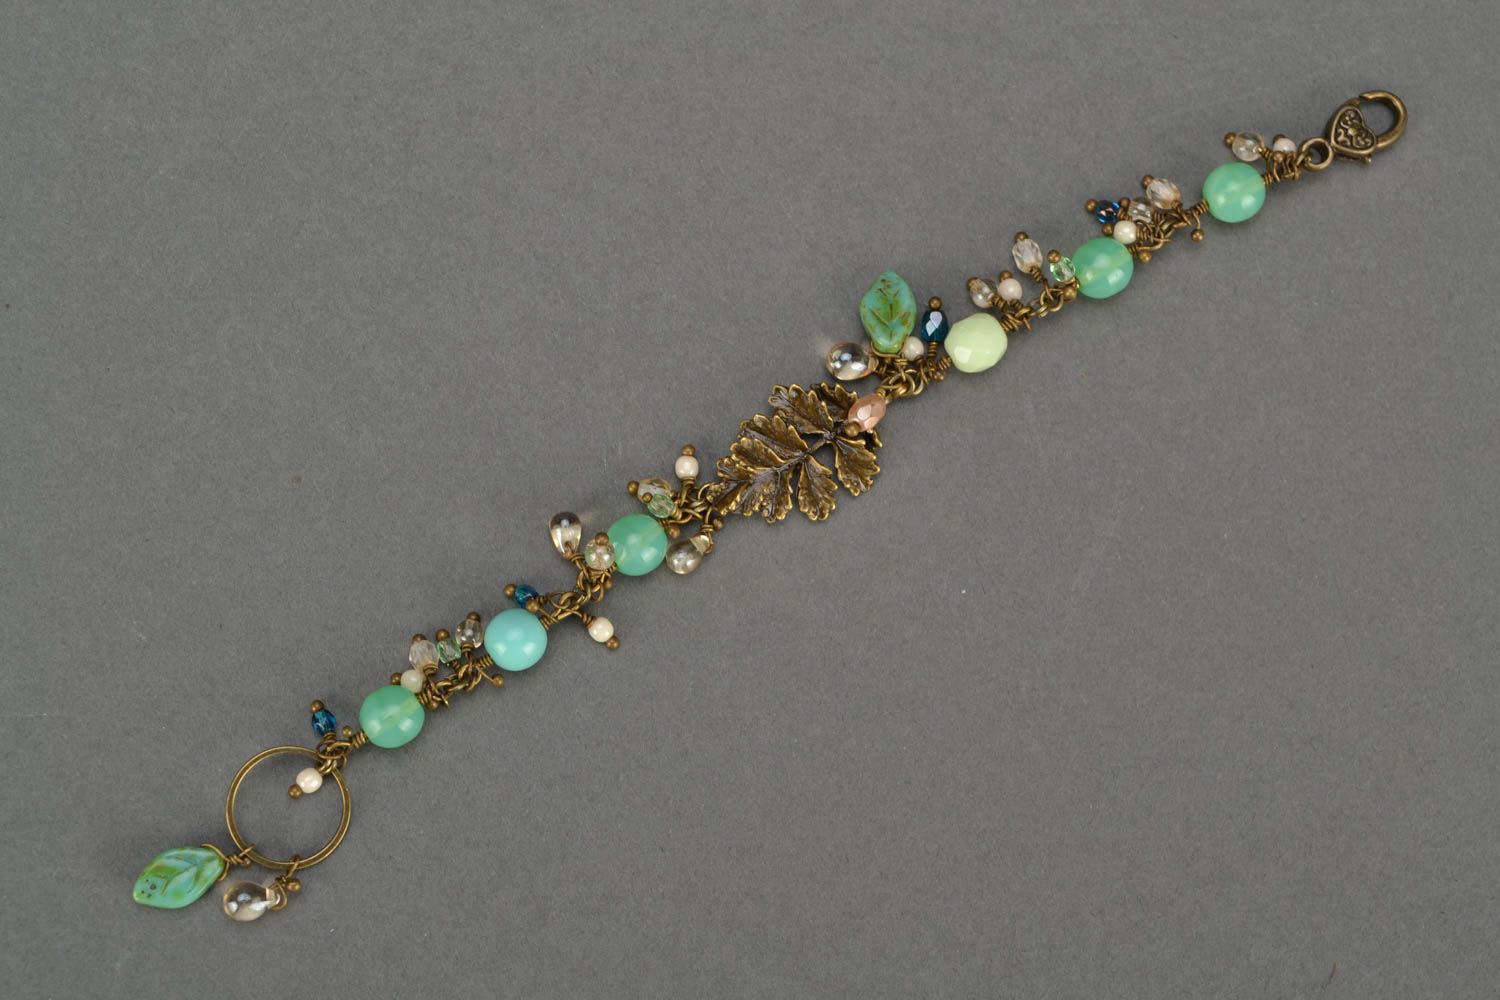 Female beautiful handmade jewelry made of glass beads bracelet and earrings photo 3